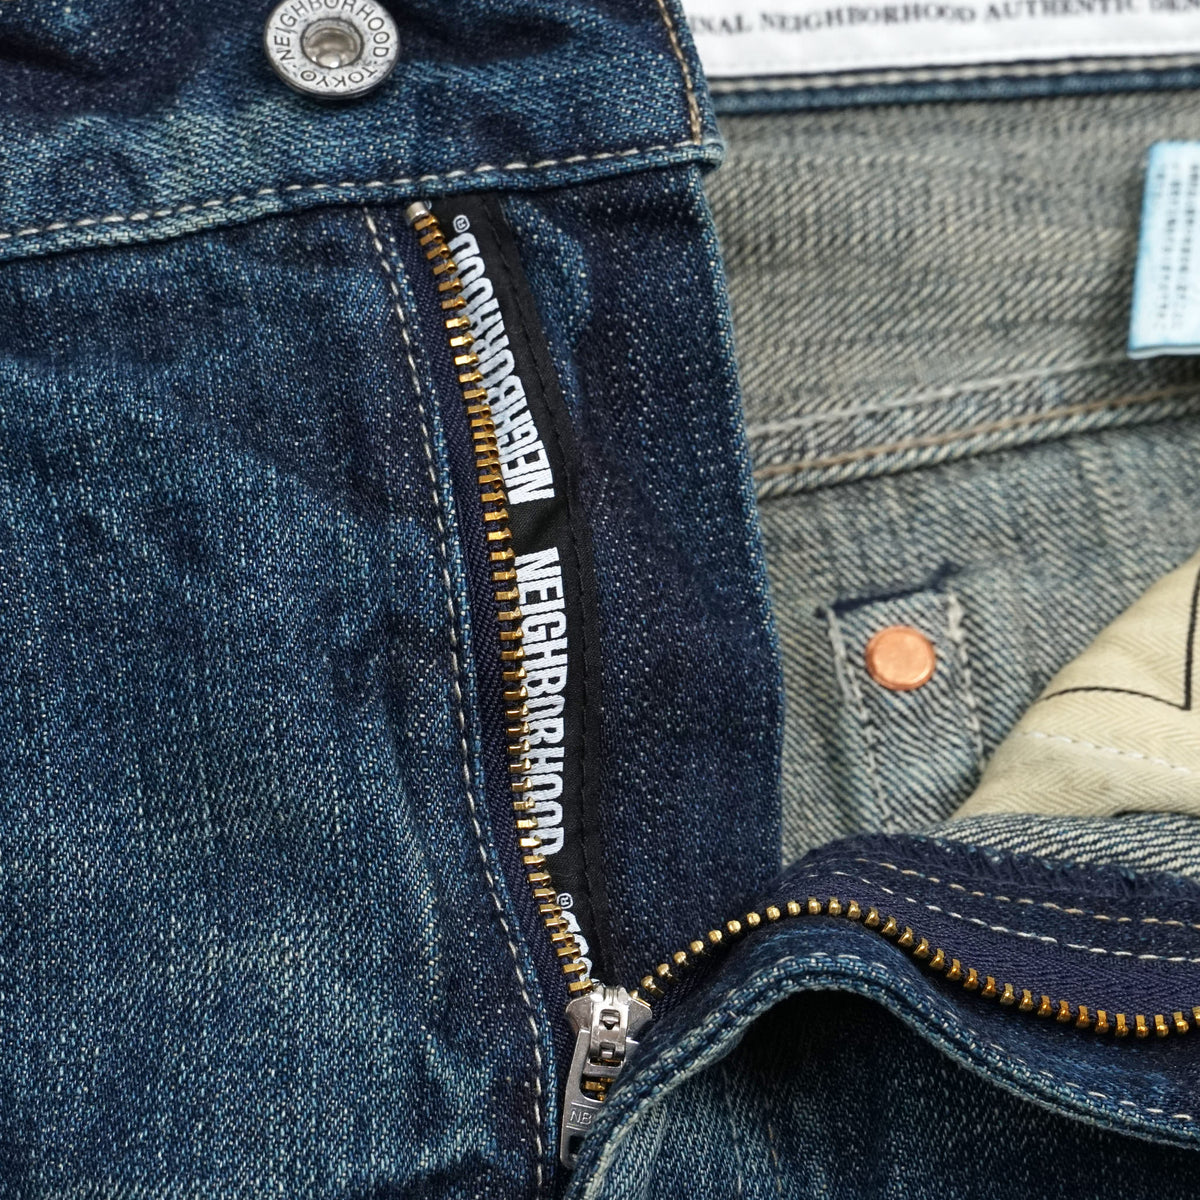 Neighborhood 5-Pocket Narrow Denim Jeans